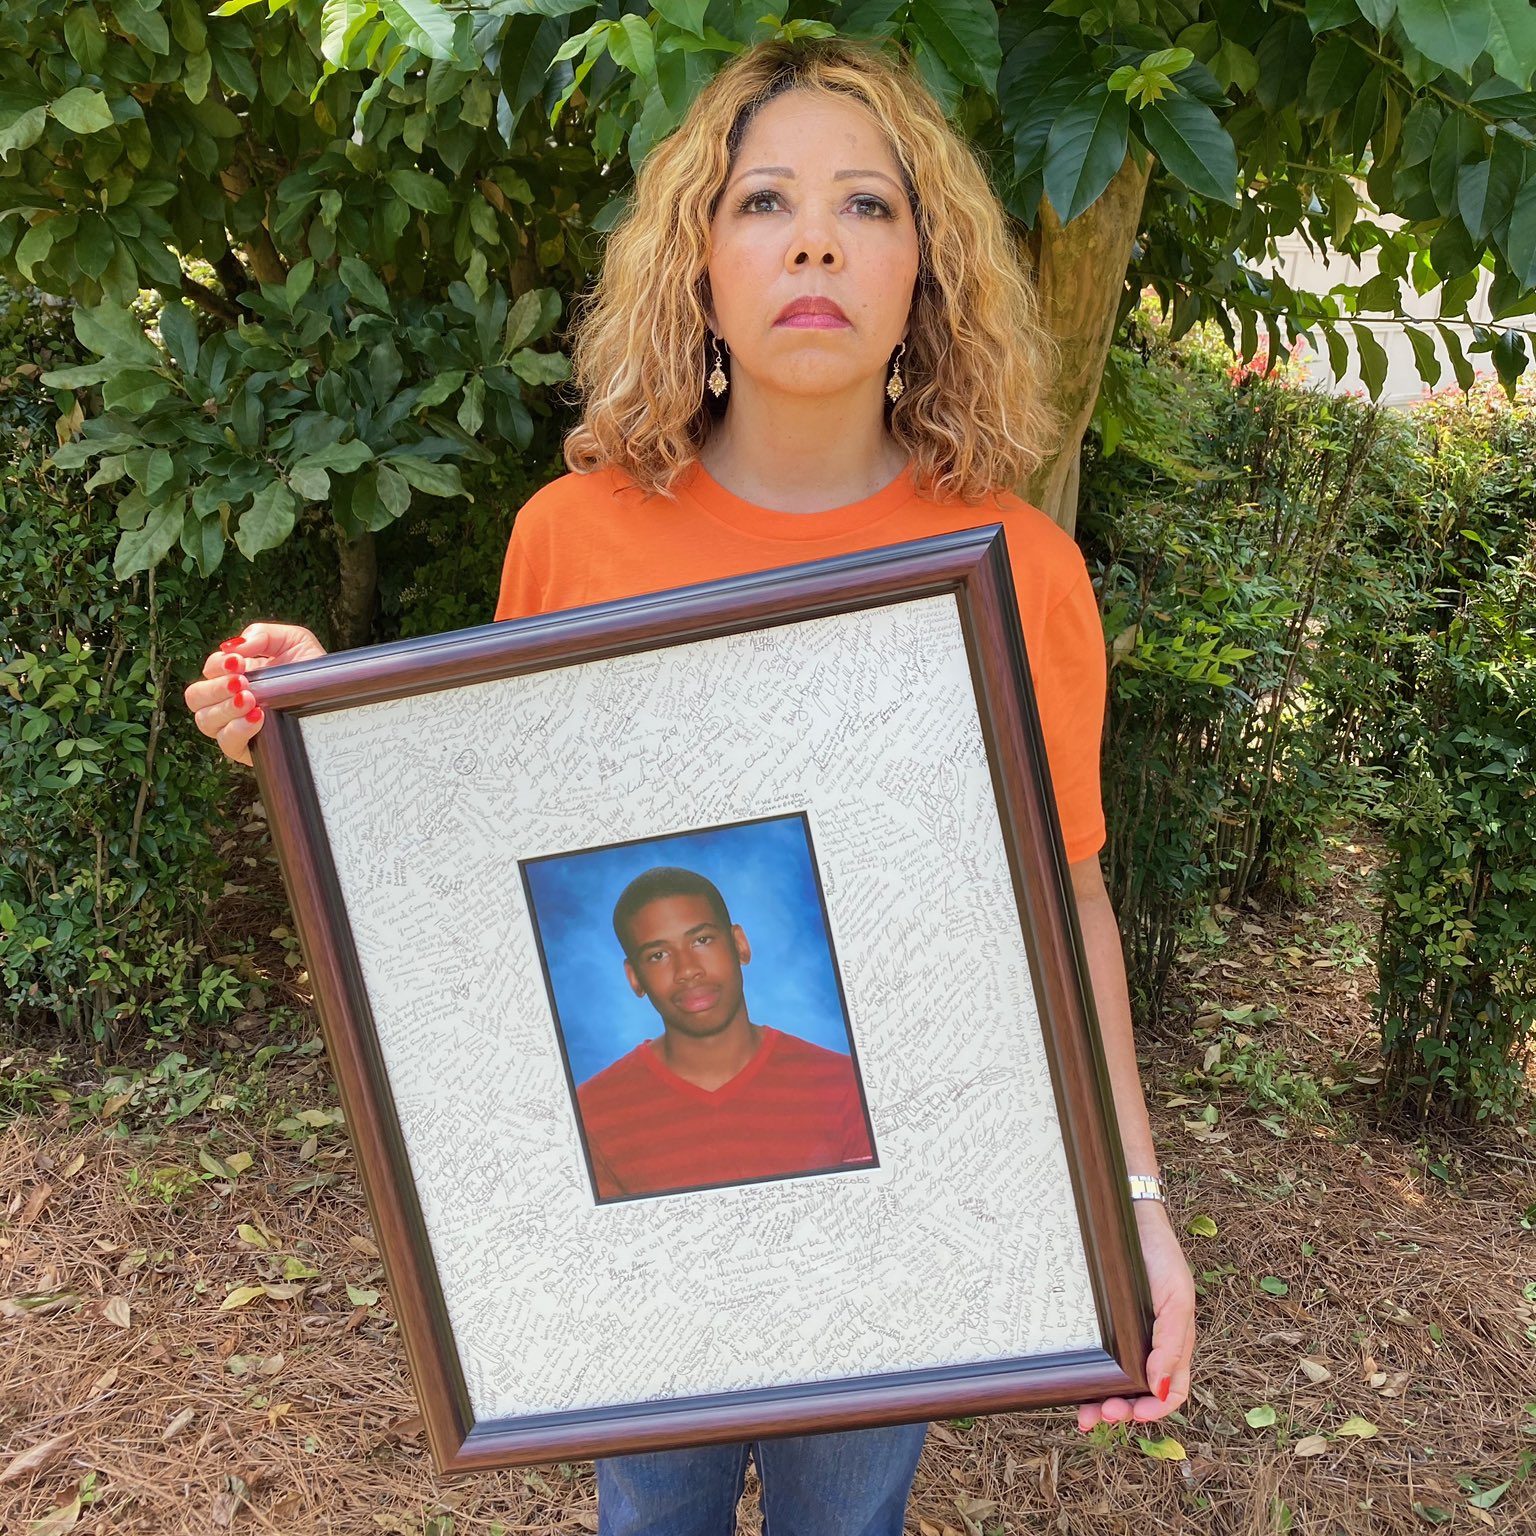 Georgia Representative Lucy McBath wear an orange shirt while holding up a photo of her son Jordan